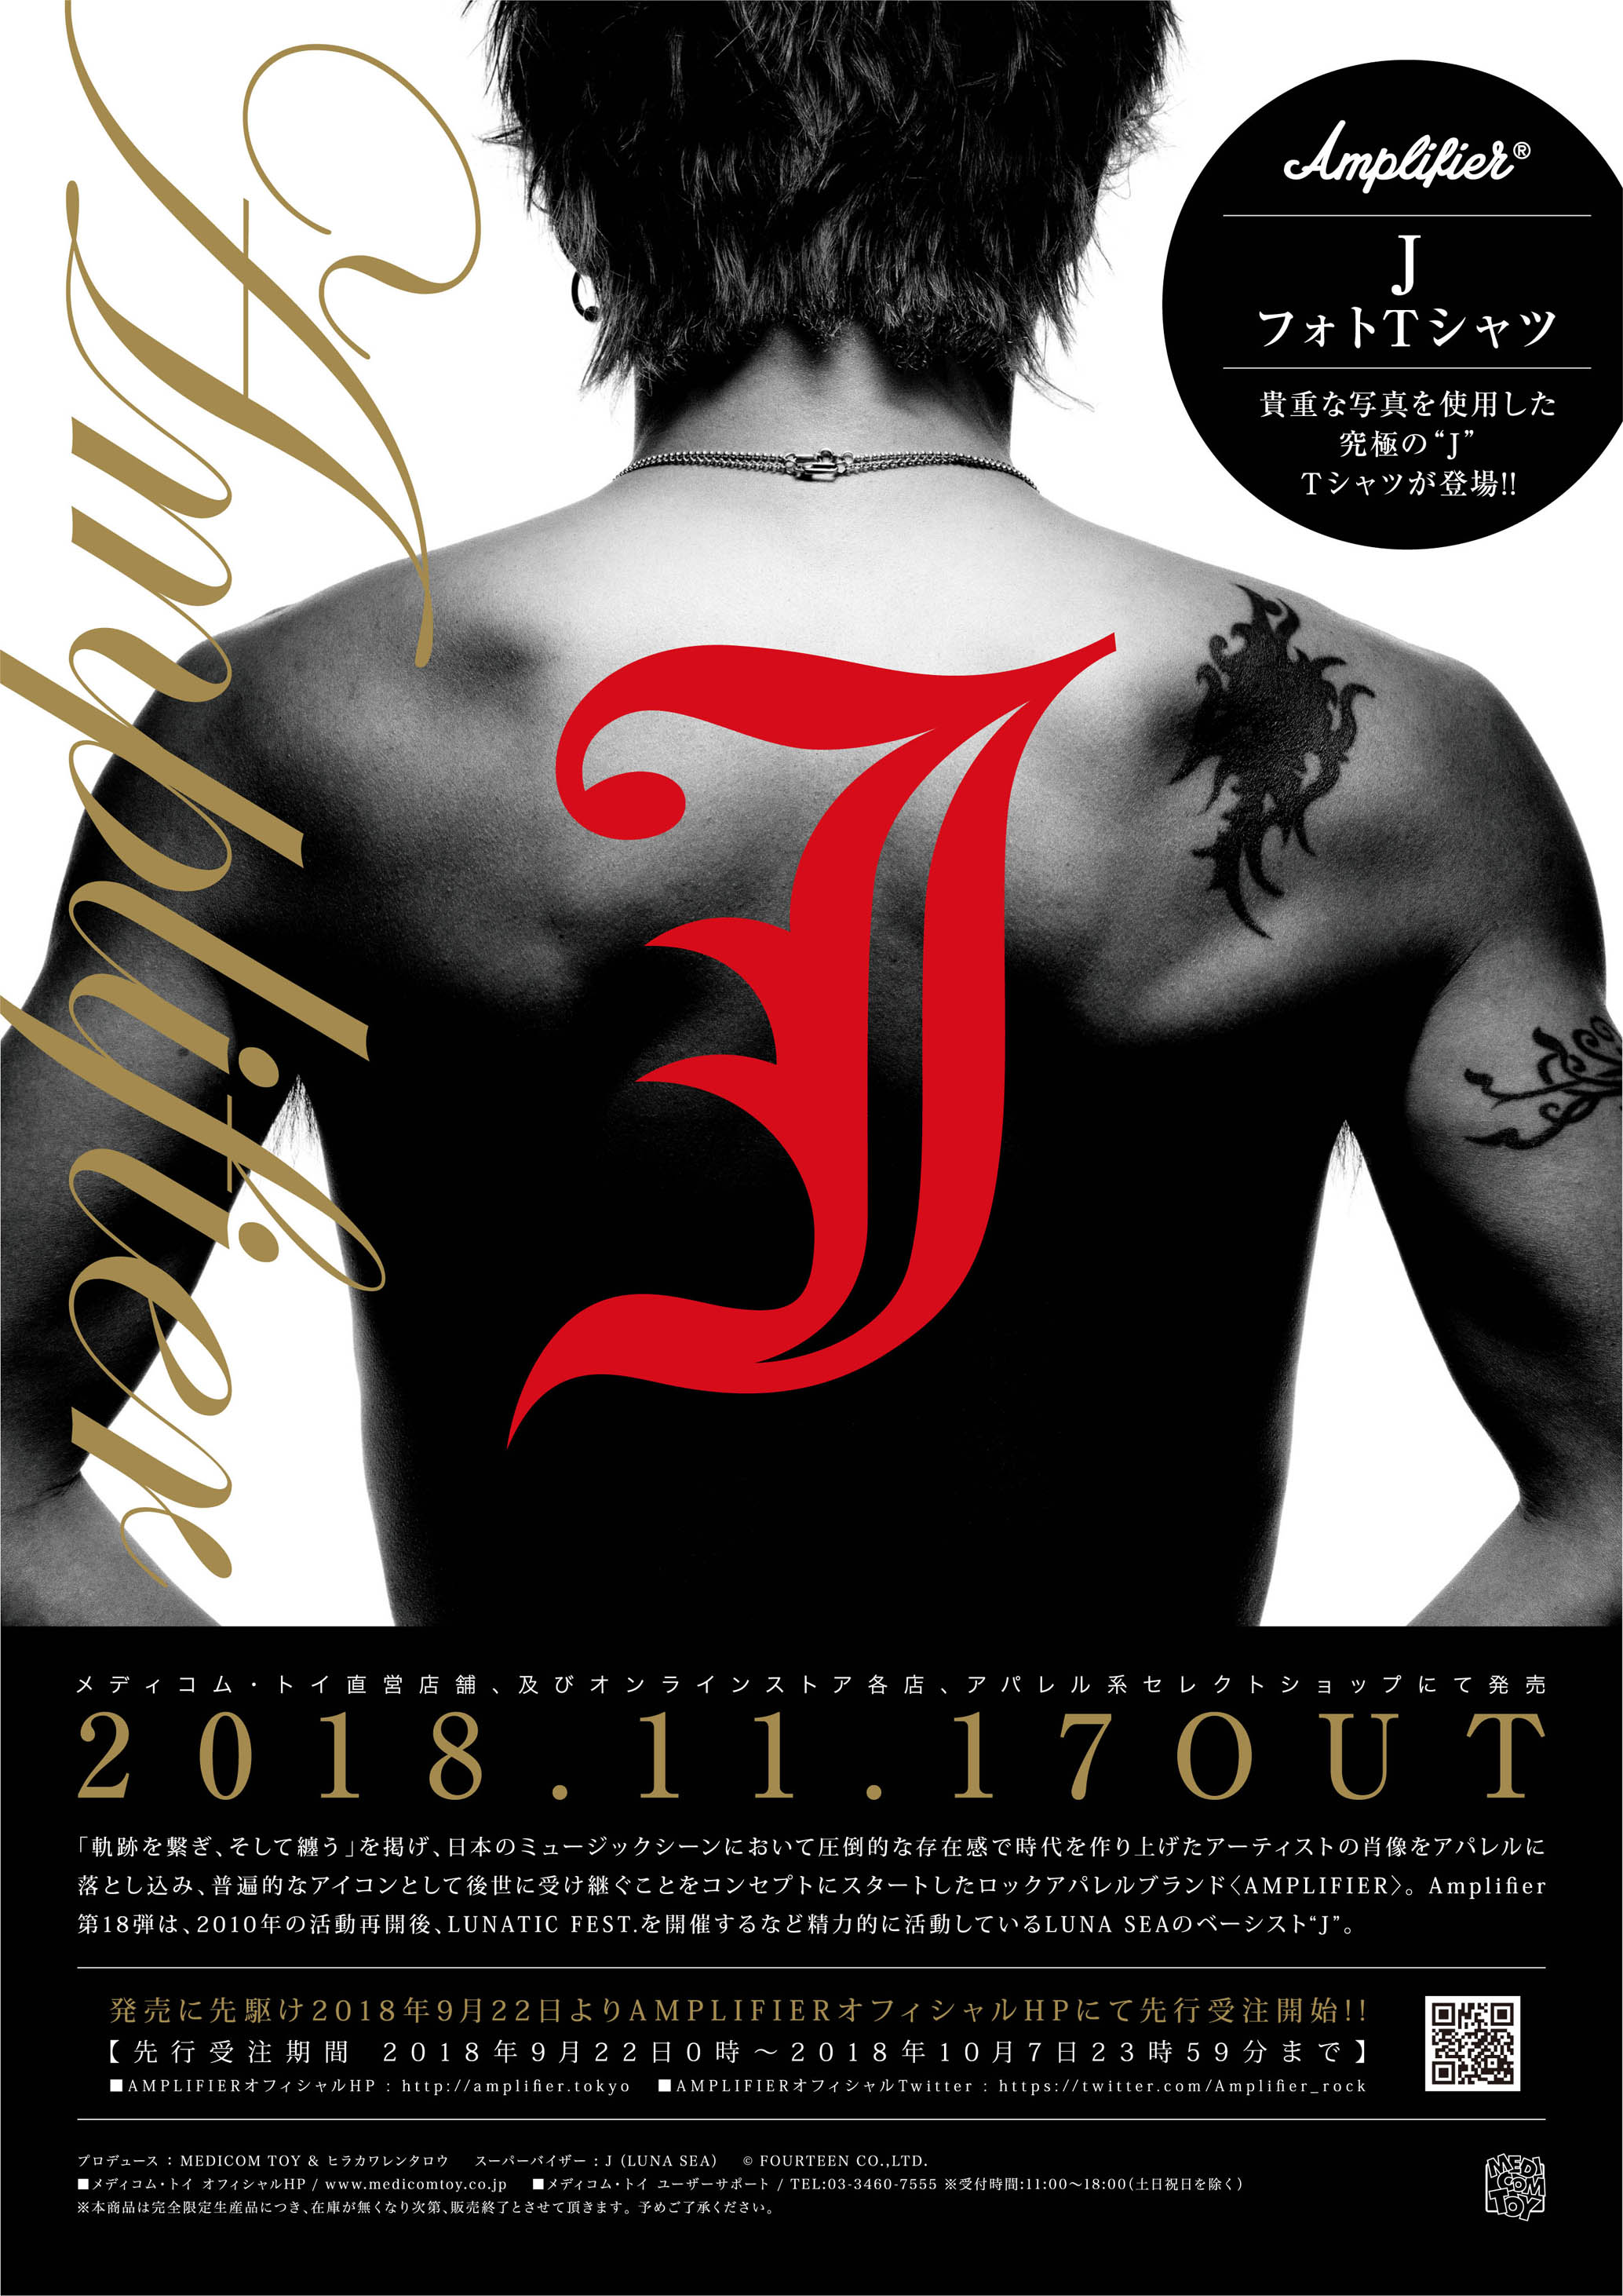 Amplifier “J” Tシャツ発売決定！ : NEWS : -J- OFFICIAL WEBSITE | J 